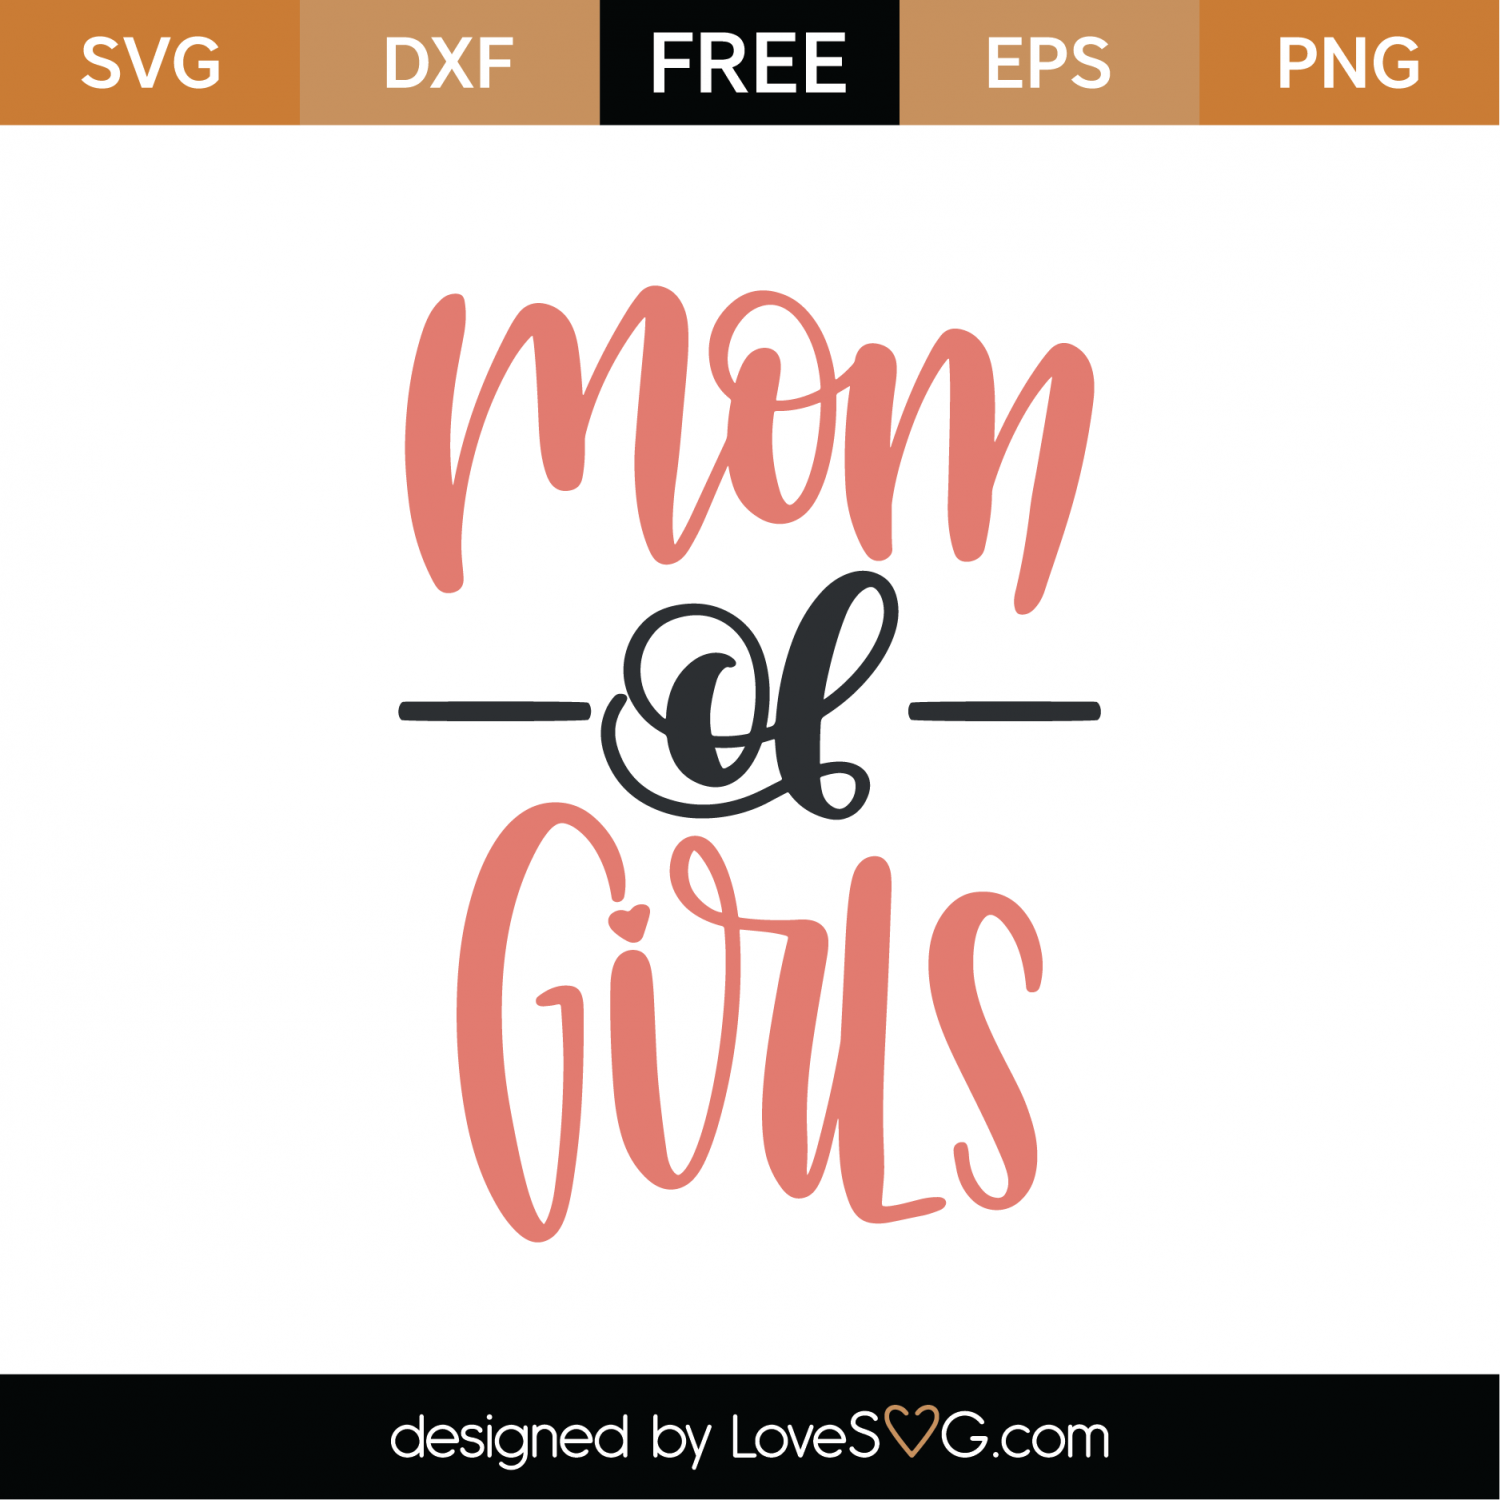 Download Free Mom Of Girls SVG Cut File | Lovesvg.com